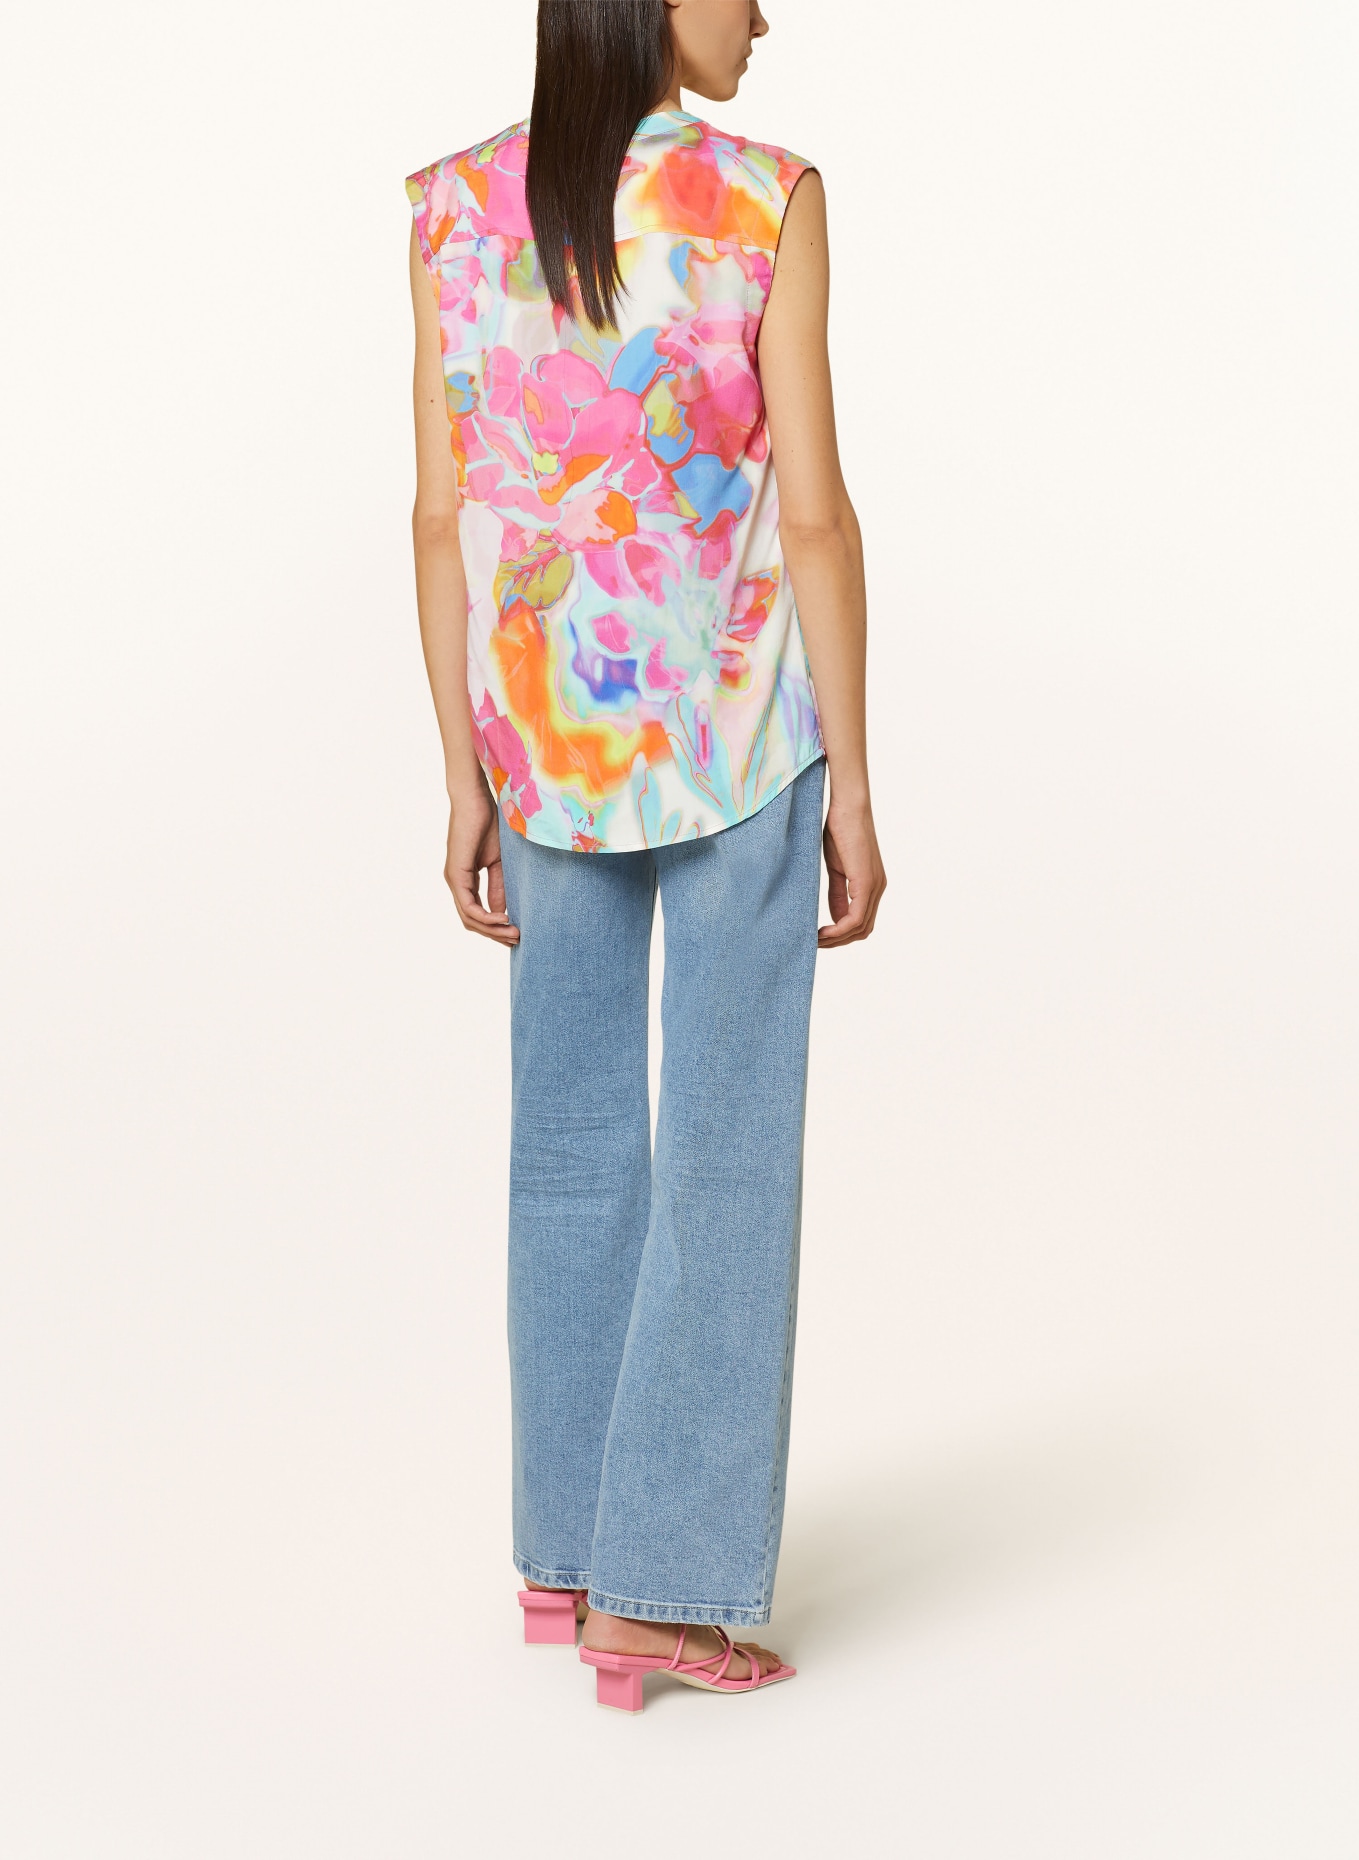 Emily VAN DEN BERGH Blouse top, Color: PINK/ ORANGE/ YELLOW (Image 3)